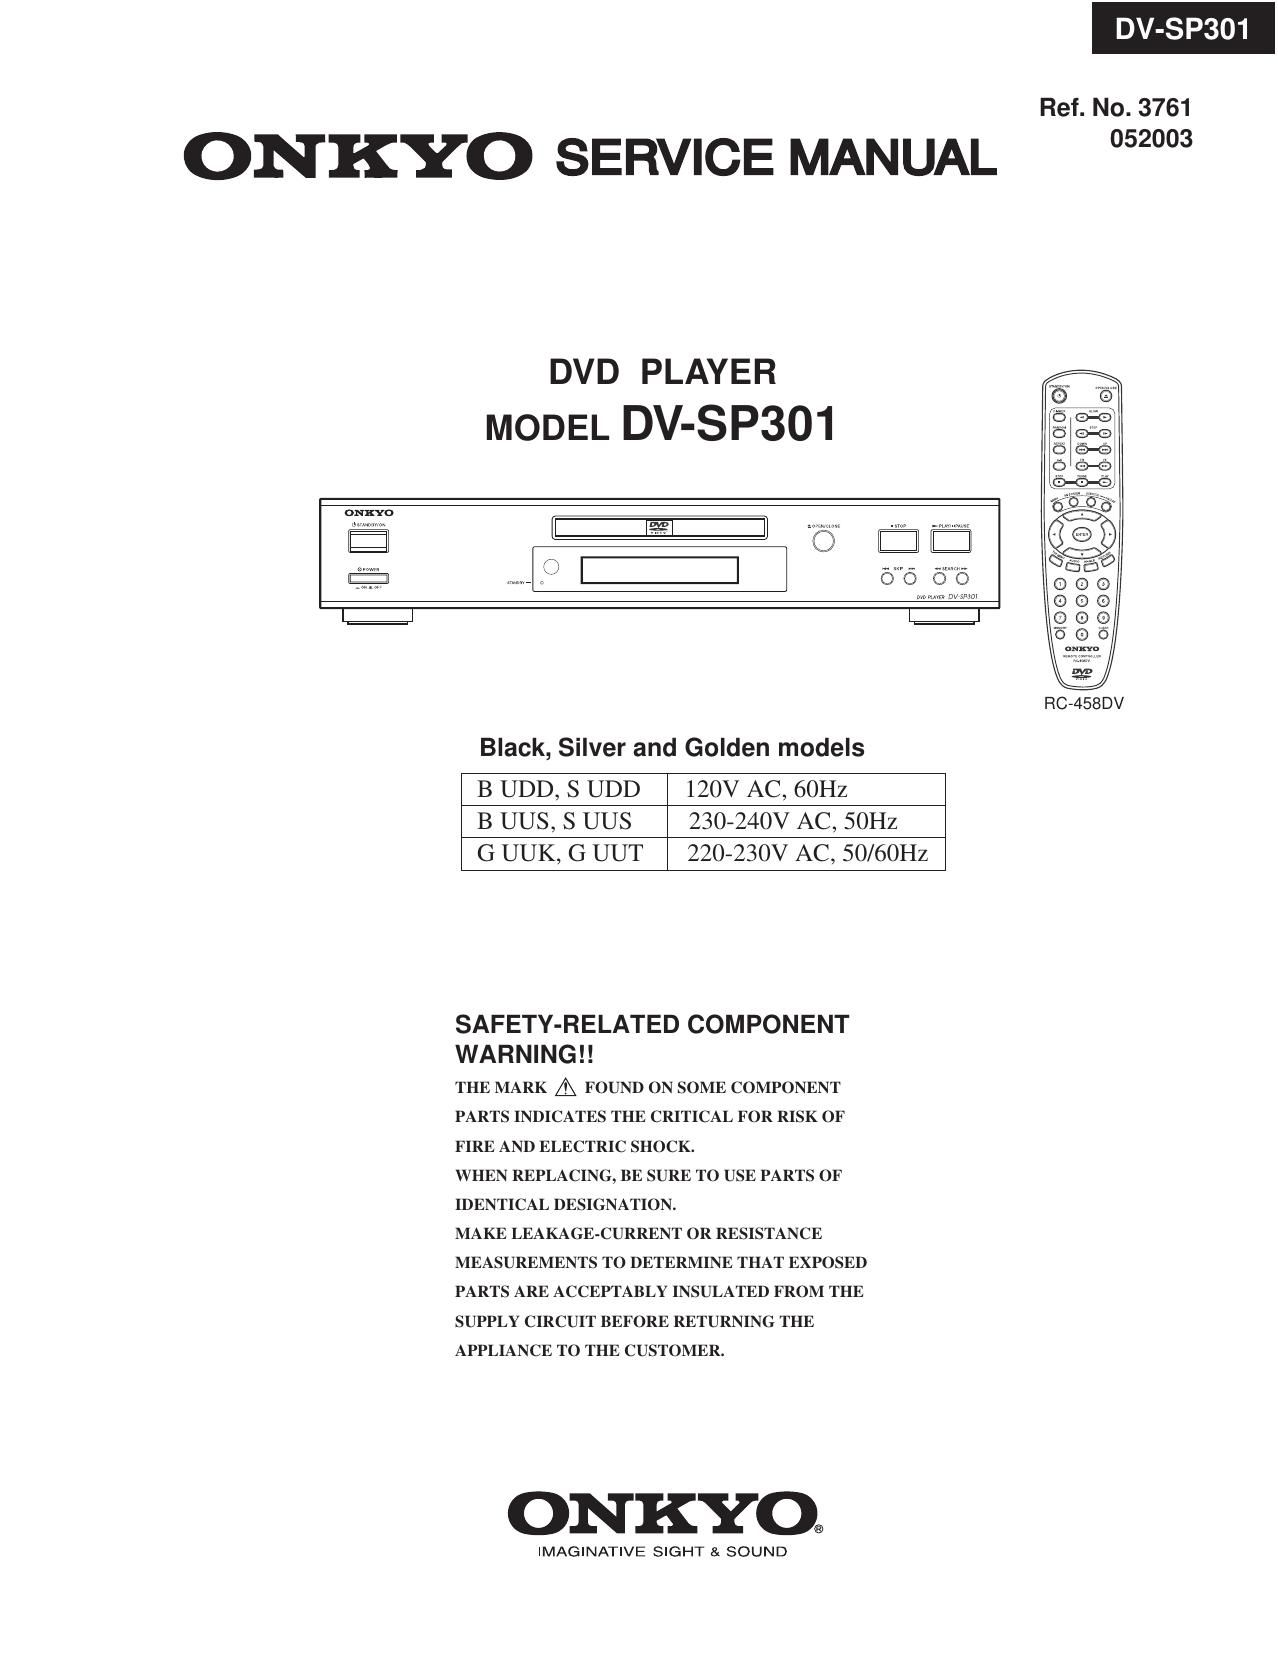 Onkyo DVSP 301 Service Manual